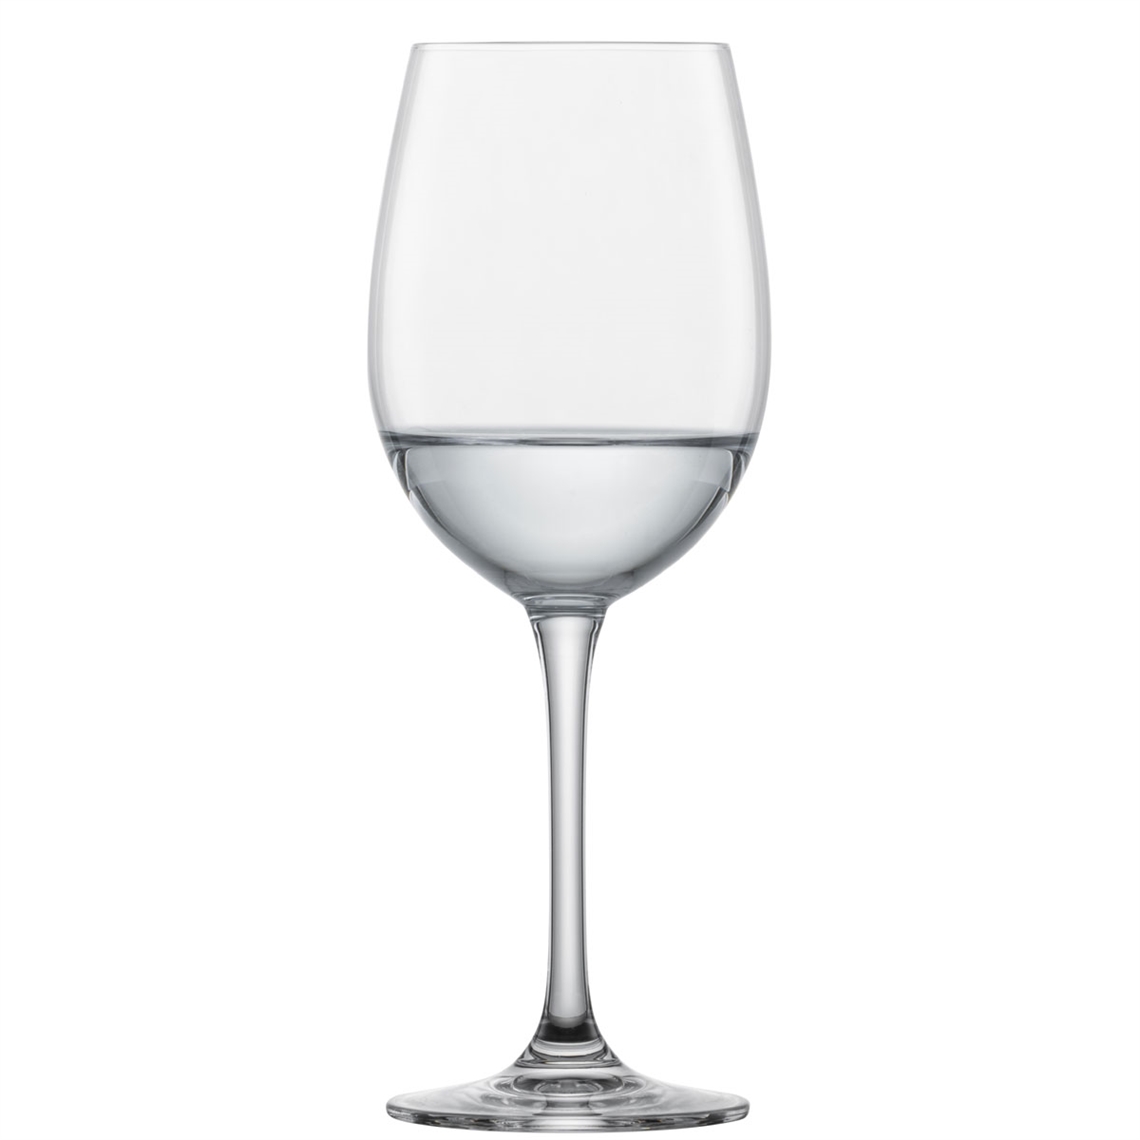 Schott Zwiesel Classico All Round Red Wine Glass - Set of 6